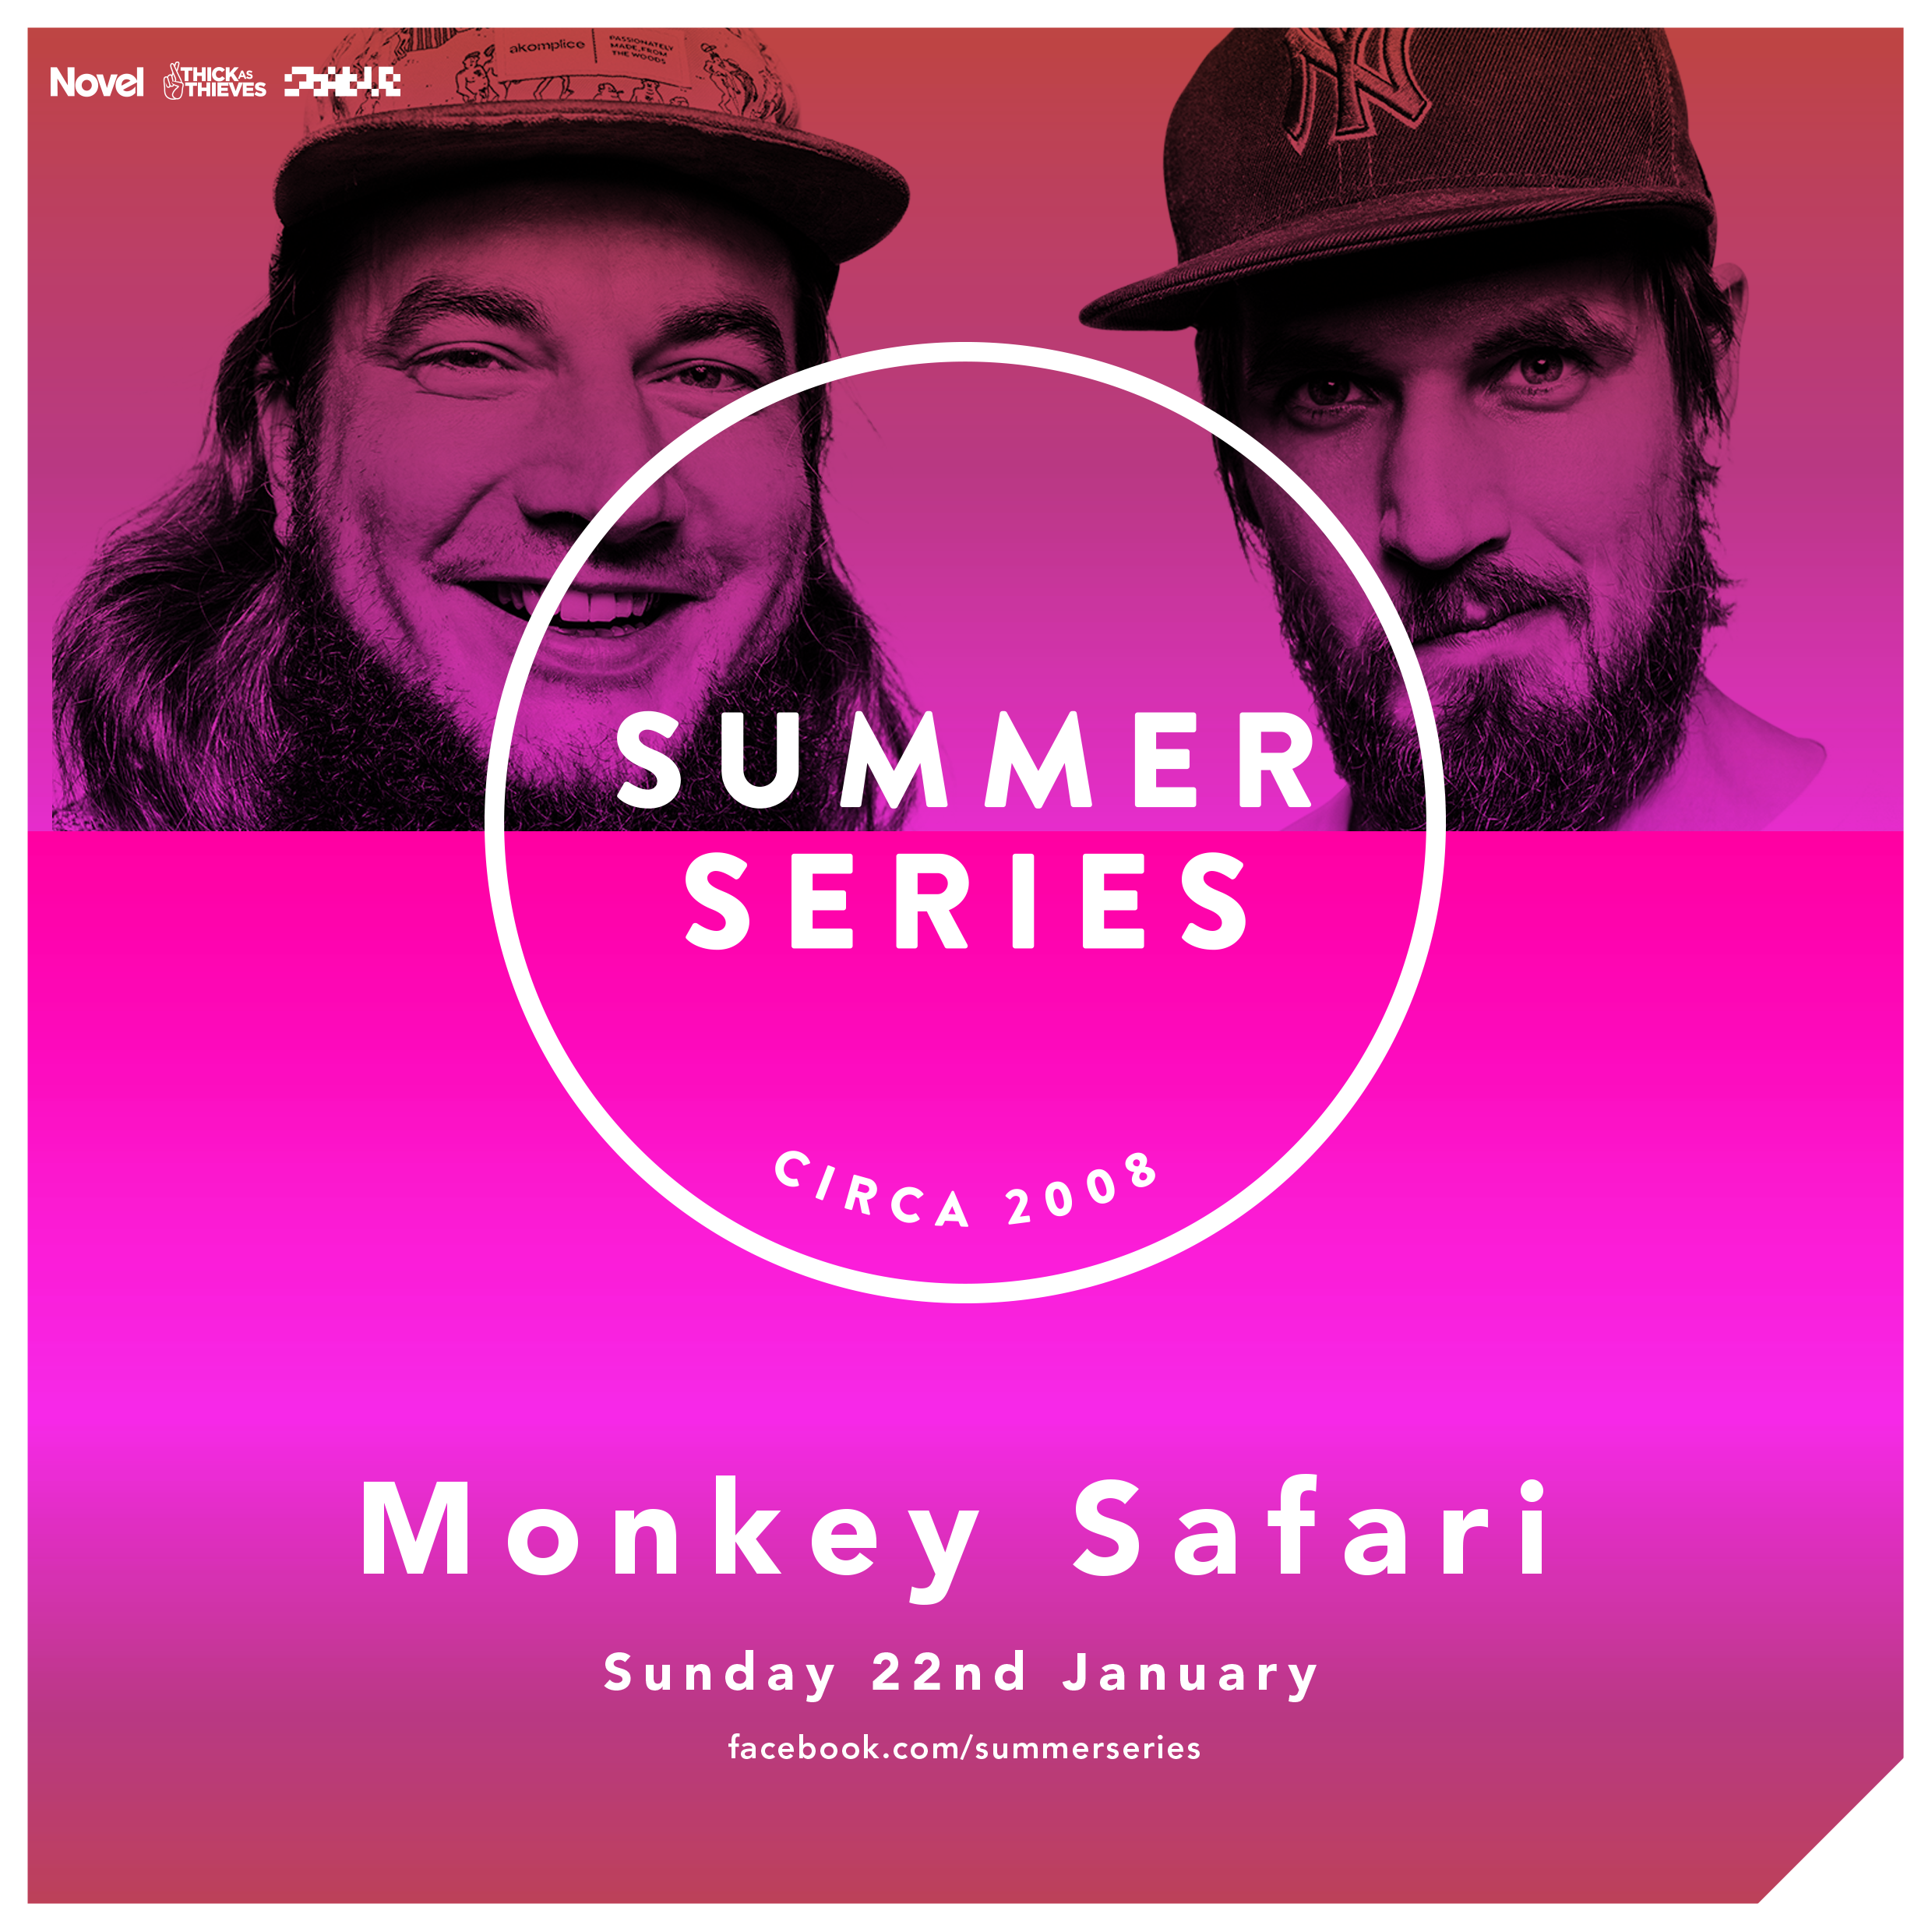  Summer Series with Monkey Safari